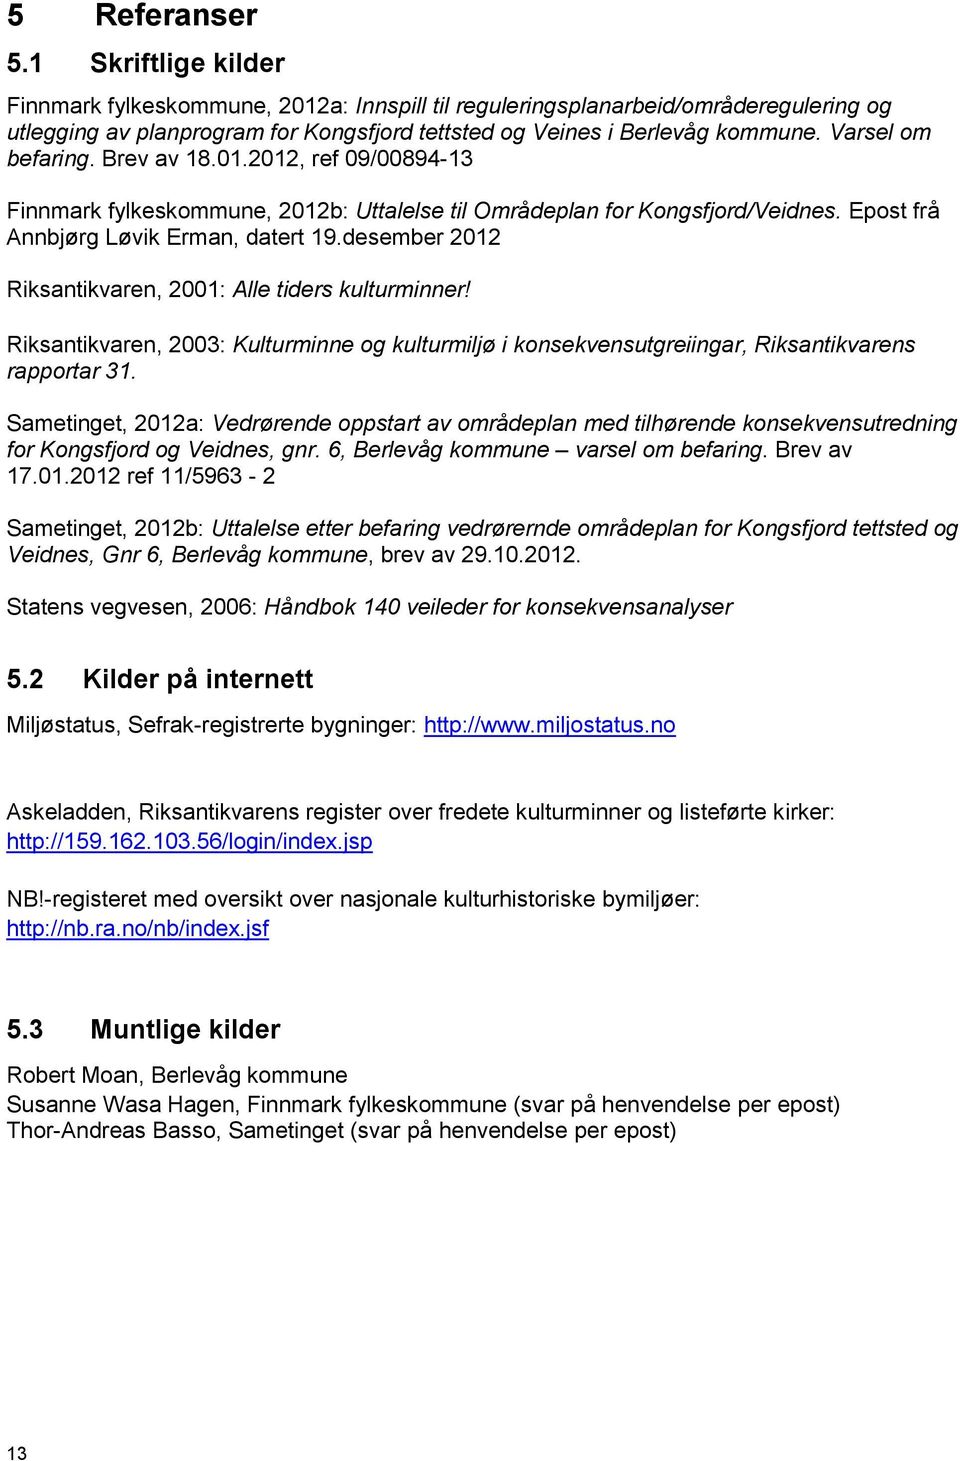 desember 2012 Riksantikvaren, 2001: Alle tiders kulturminner! Riksantikvaren, 2003: Kulturminne og kulturmiljø i konsekvensutgreiingar, Riksantikvarens rapportar 31.